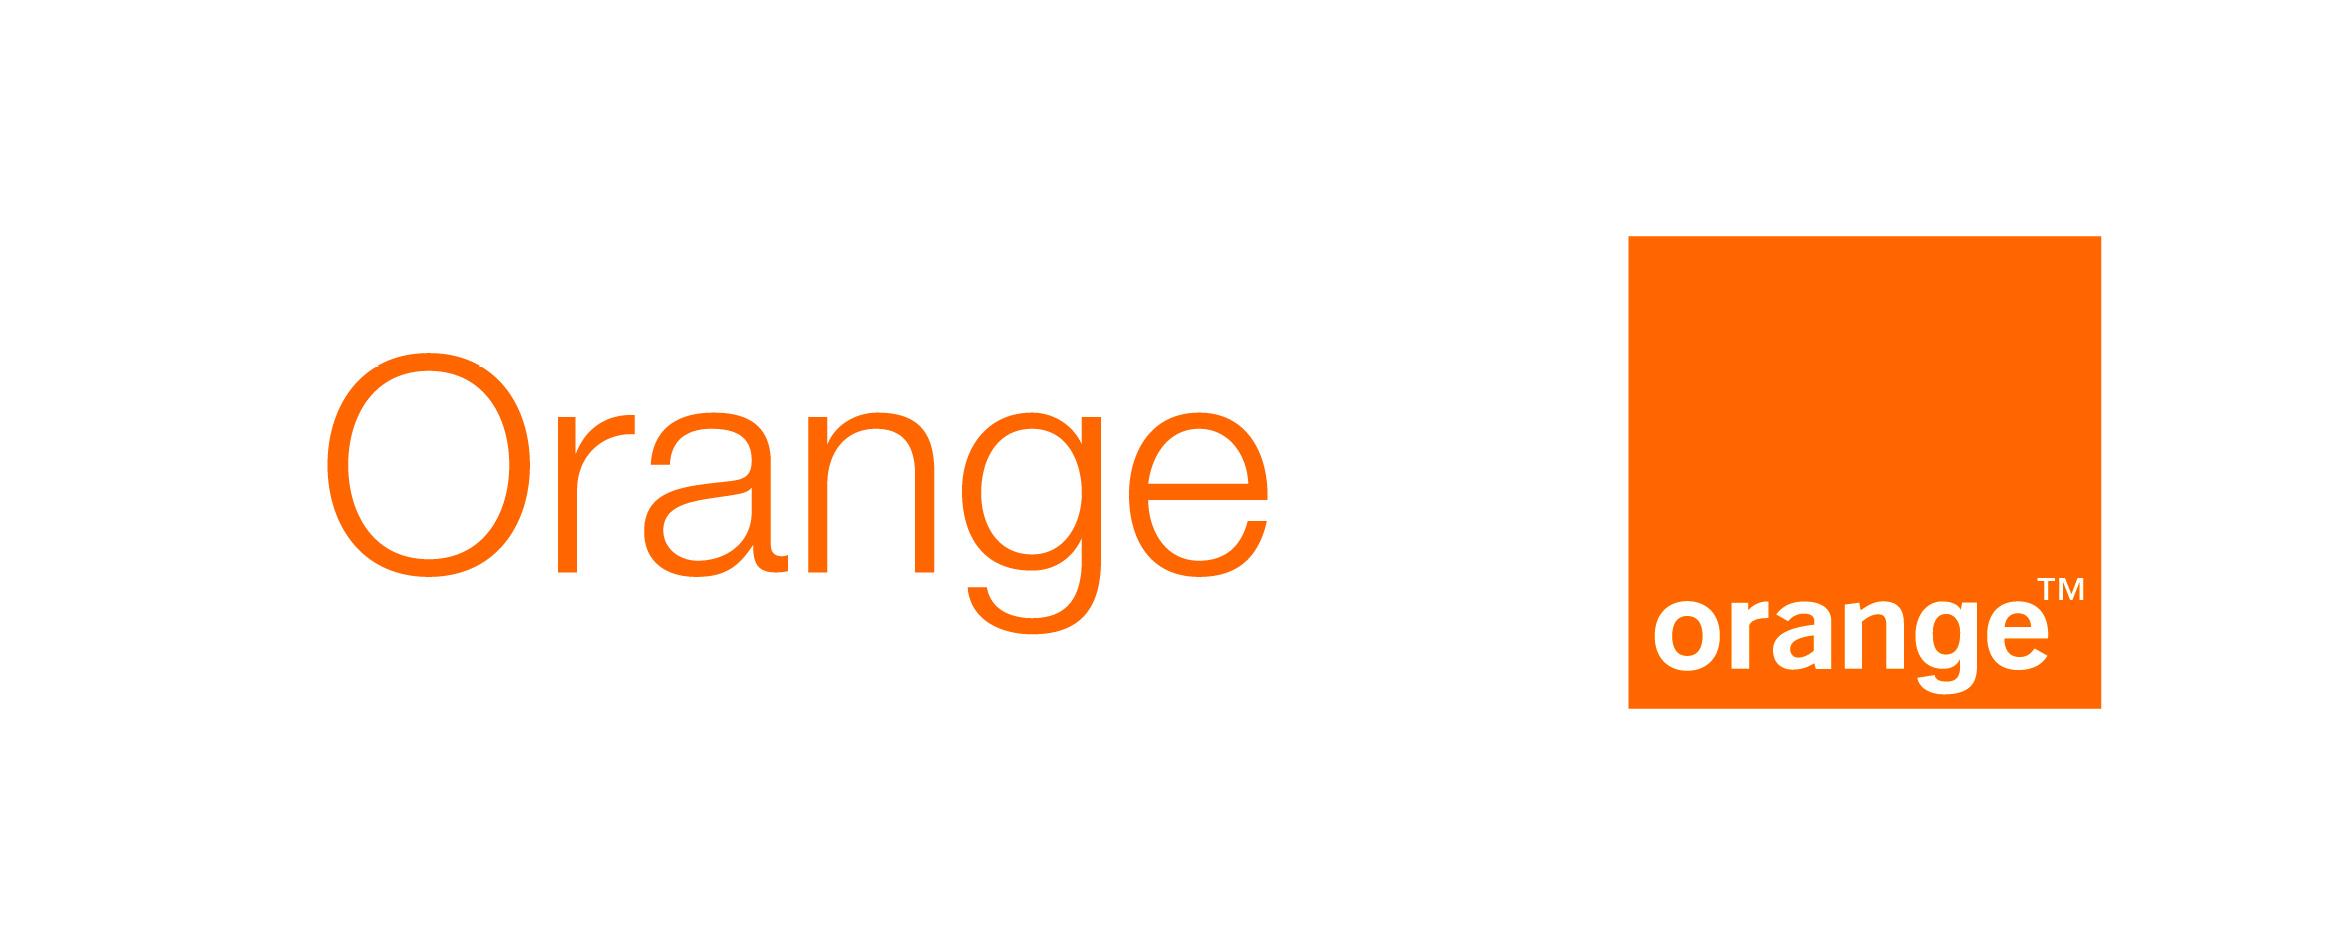 orange logo operaotr